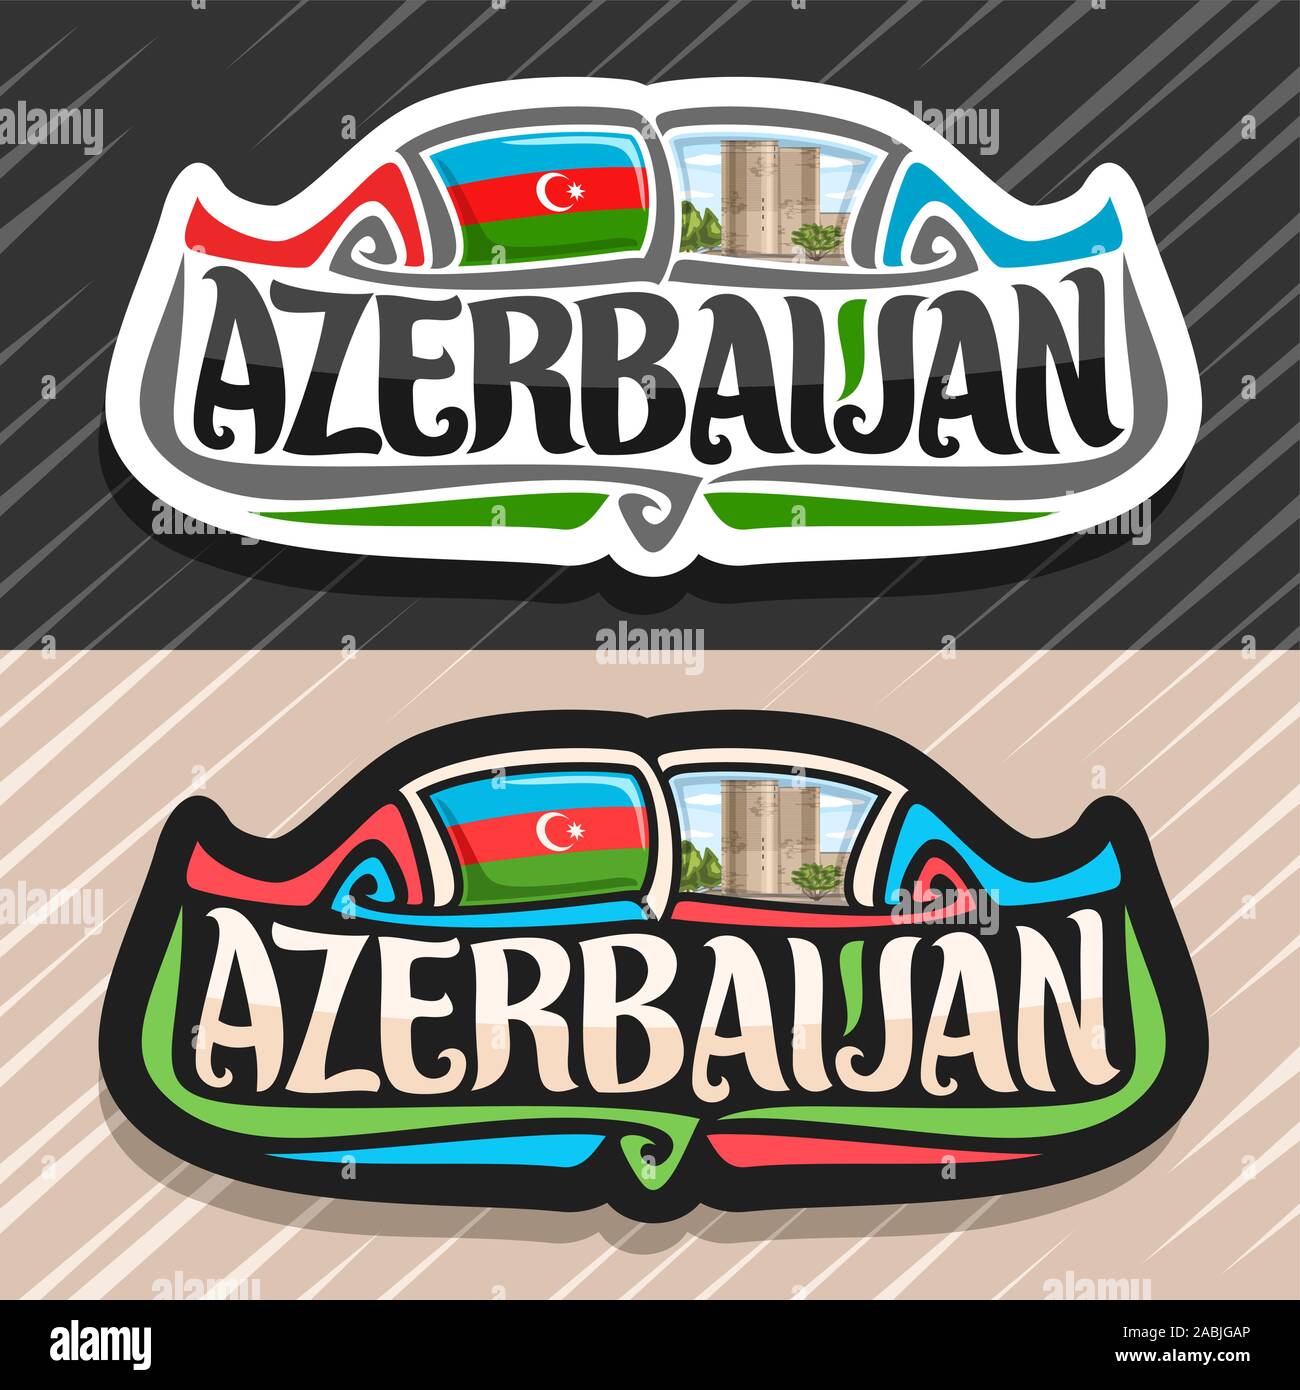 Vector logo for Azerbaijan country, fridge magnet with azerbaijanian state flag, original brush typeface for word azerbaijan and national symbol - Mai Stock Vector